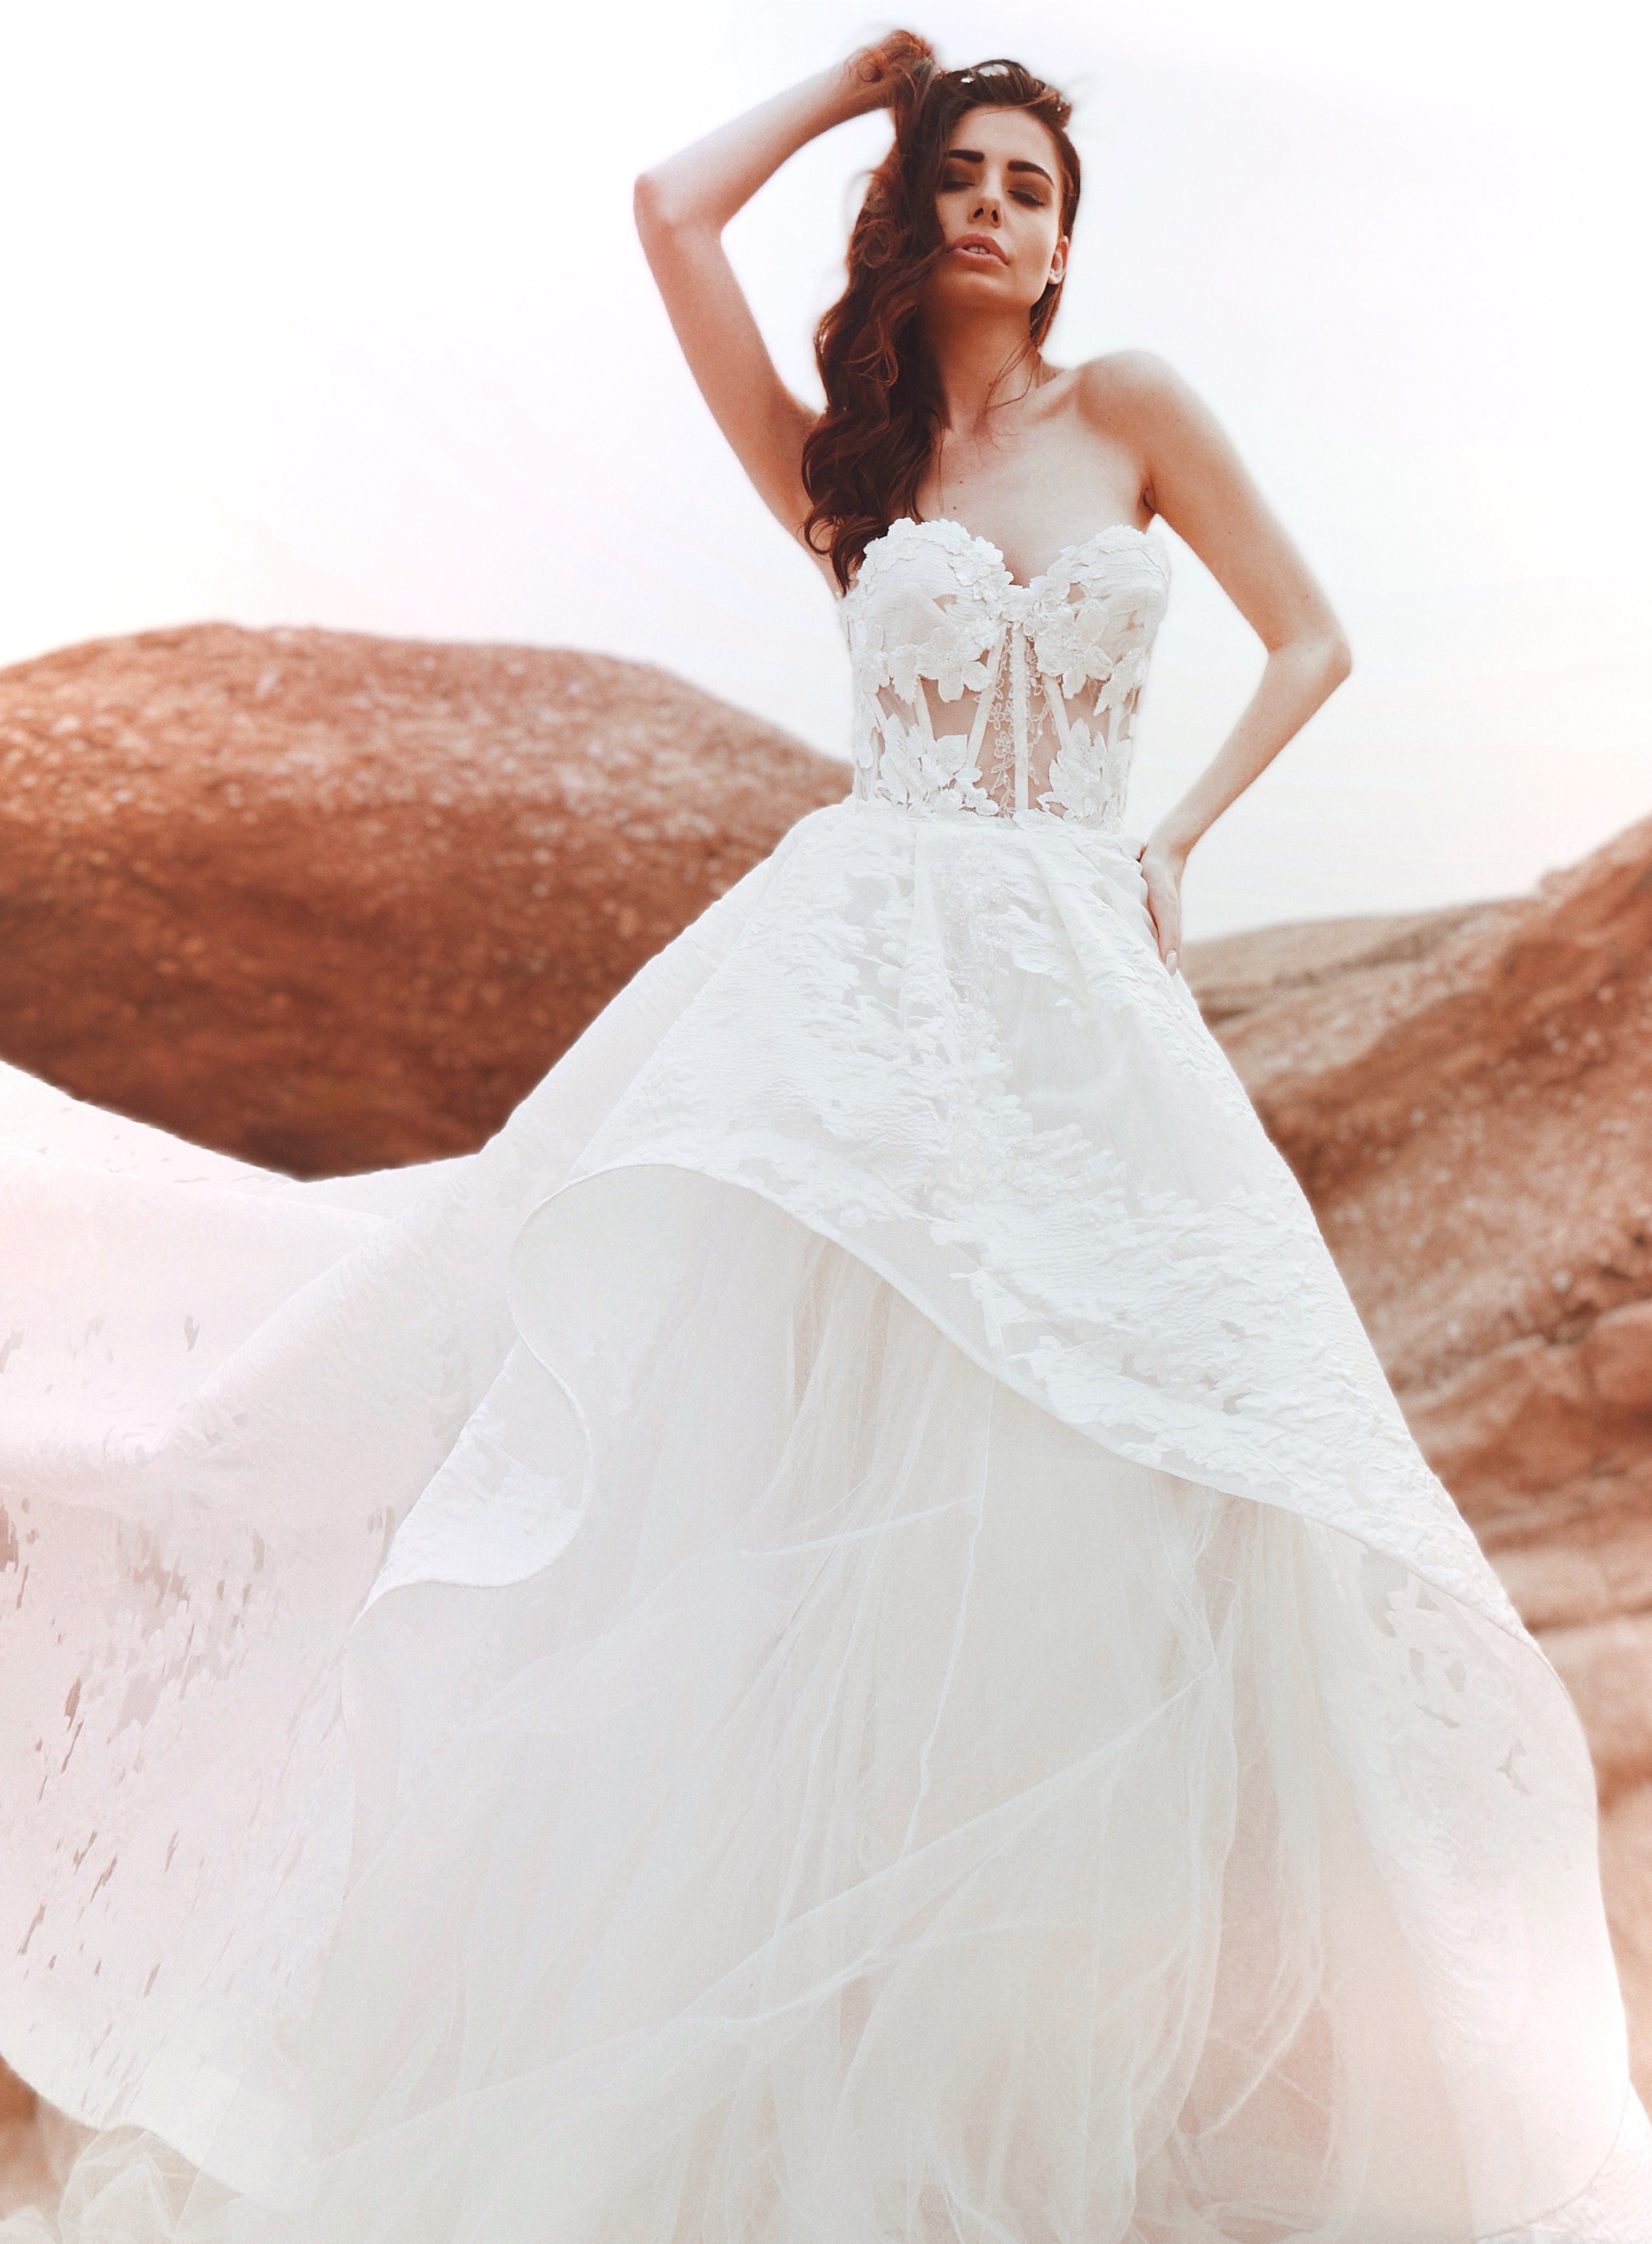 Tiered asymmetrical wedding dress with ball gown skirt by Lauren Elaine.